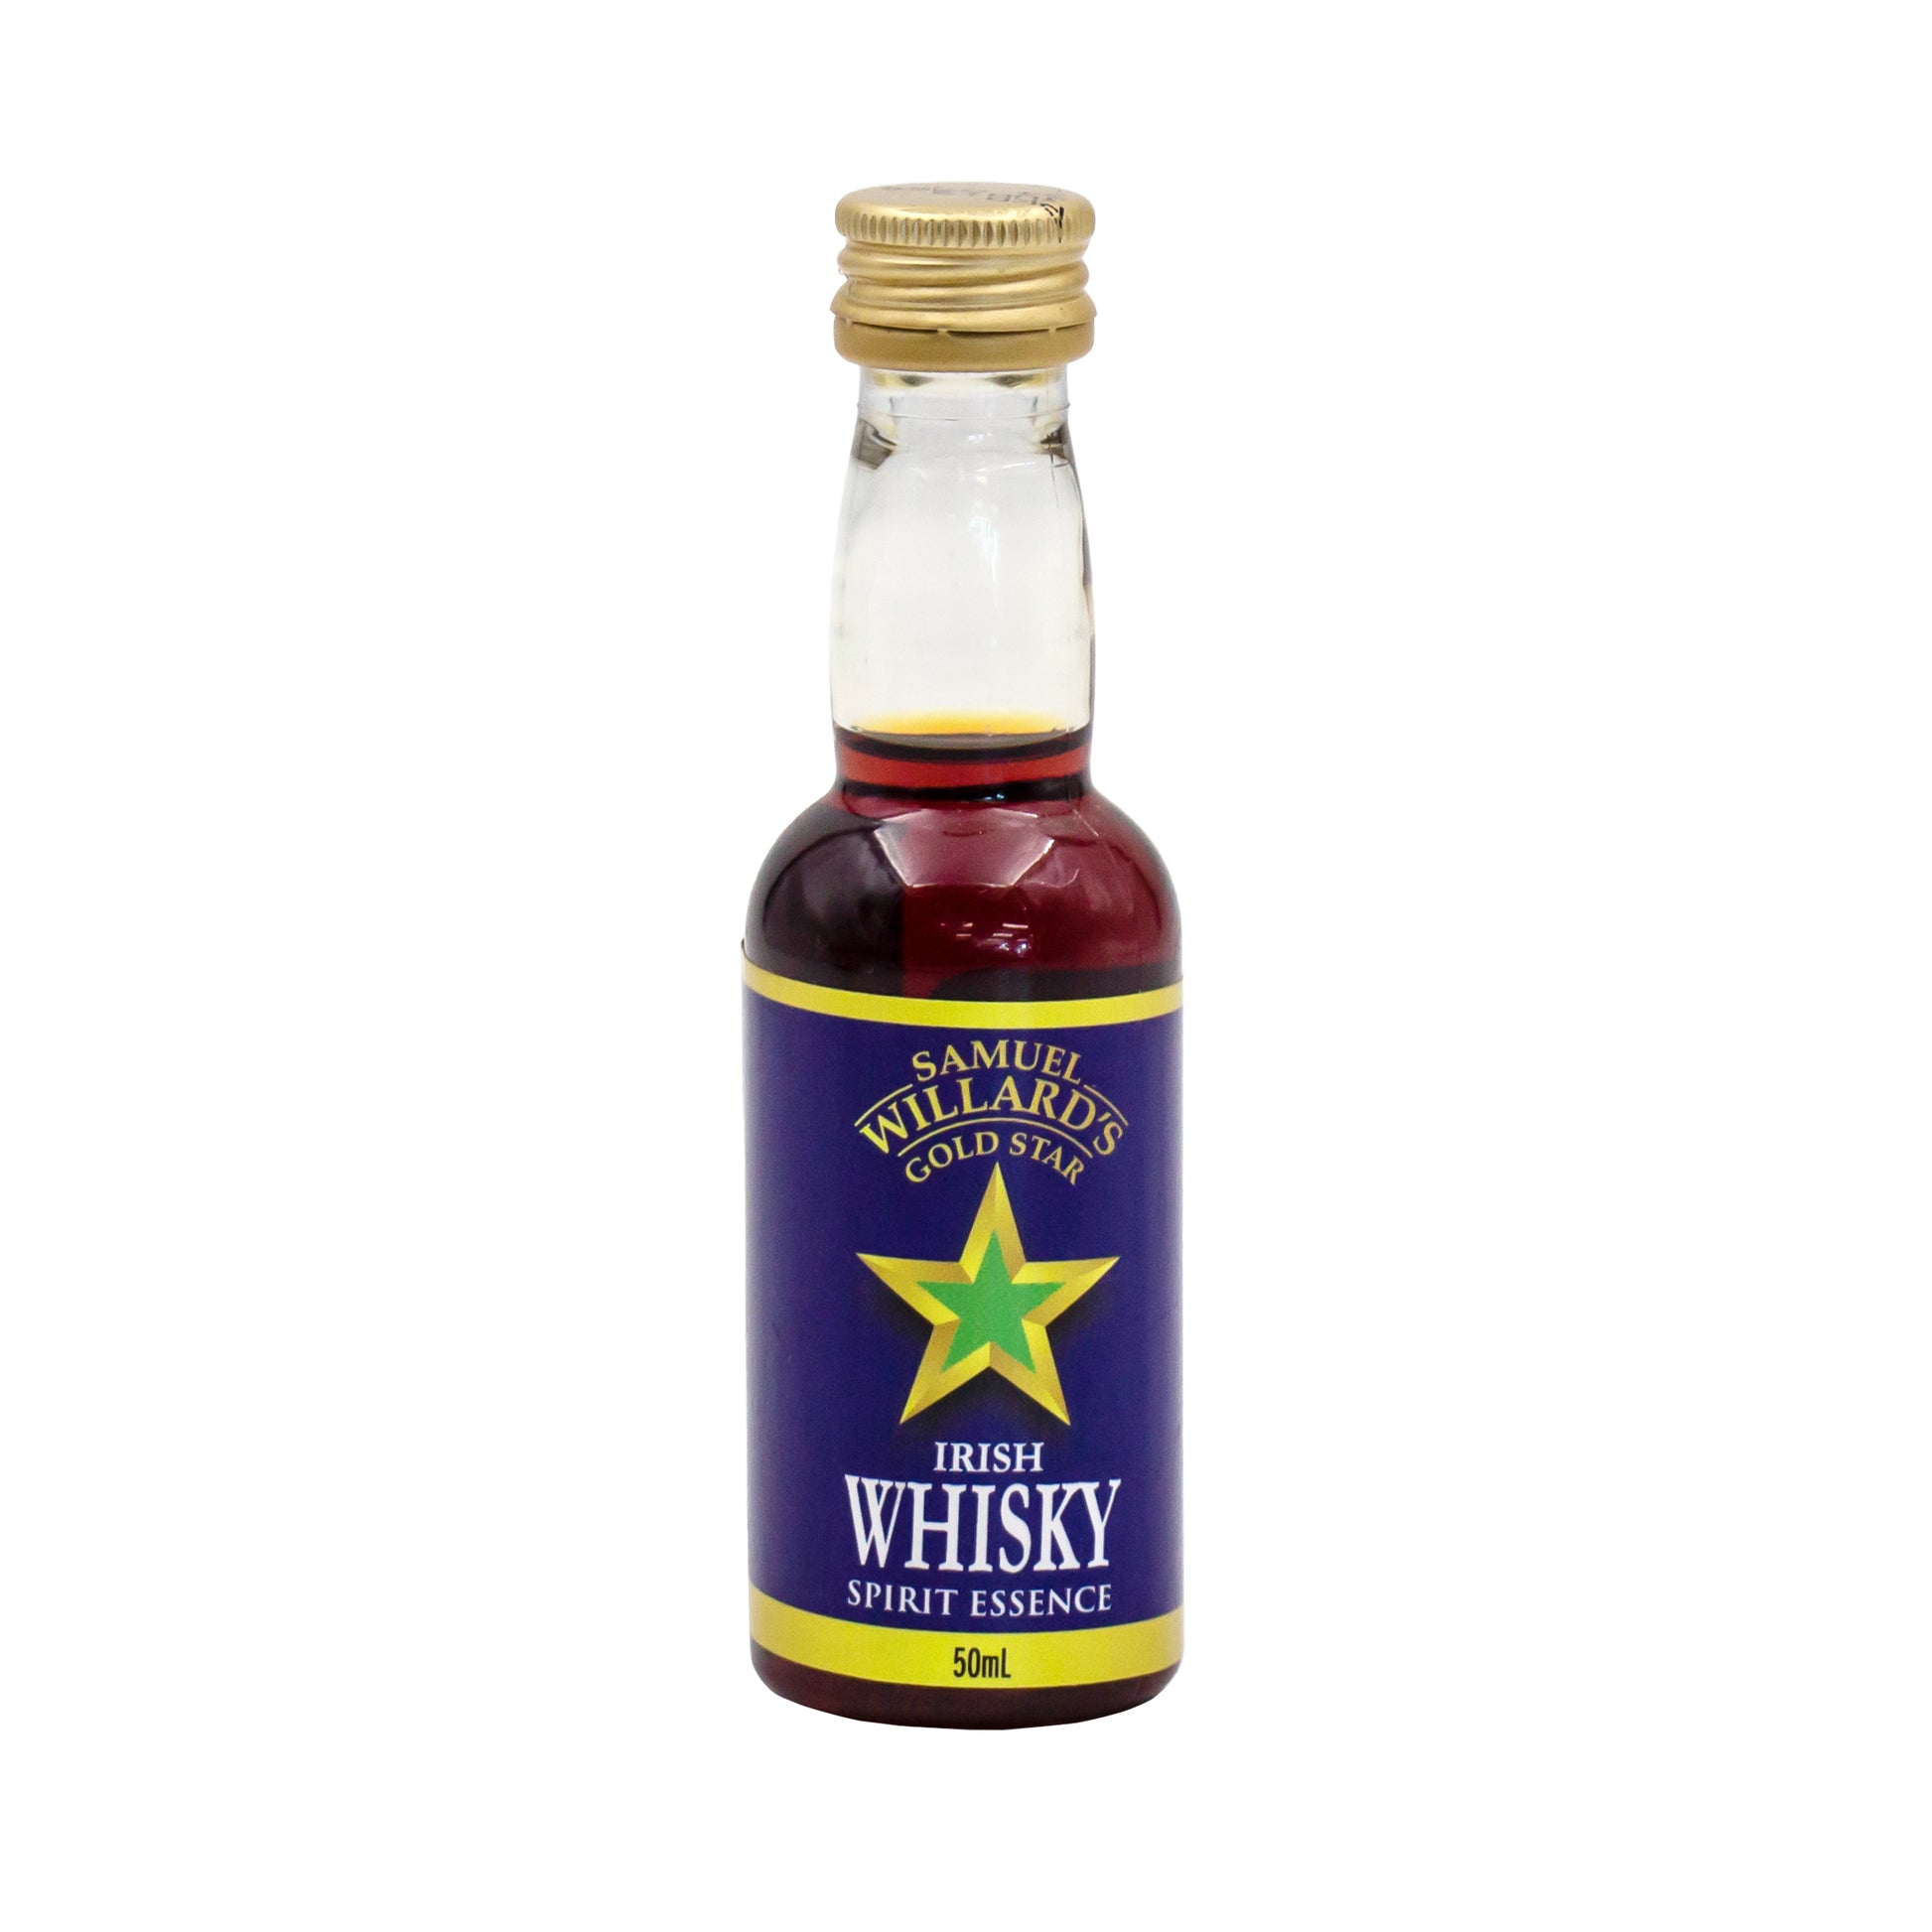 50ml bottle of samuel willards irish whisky essence